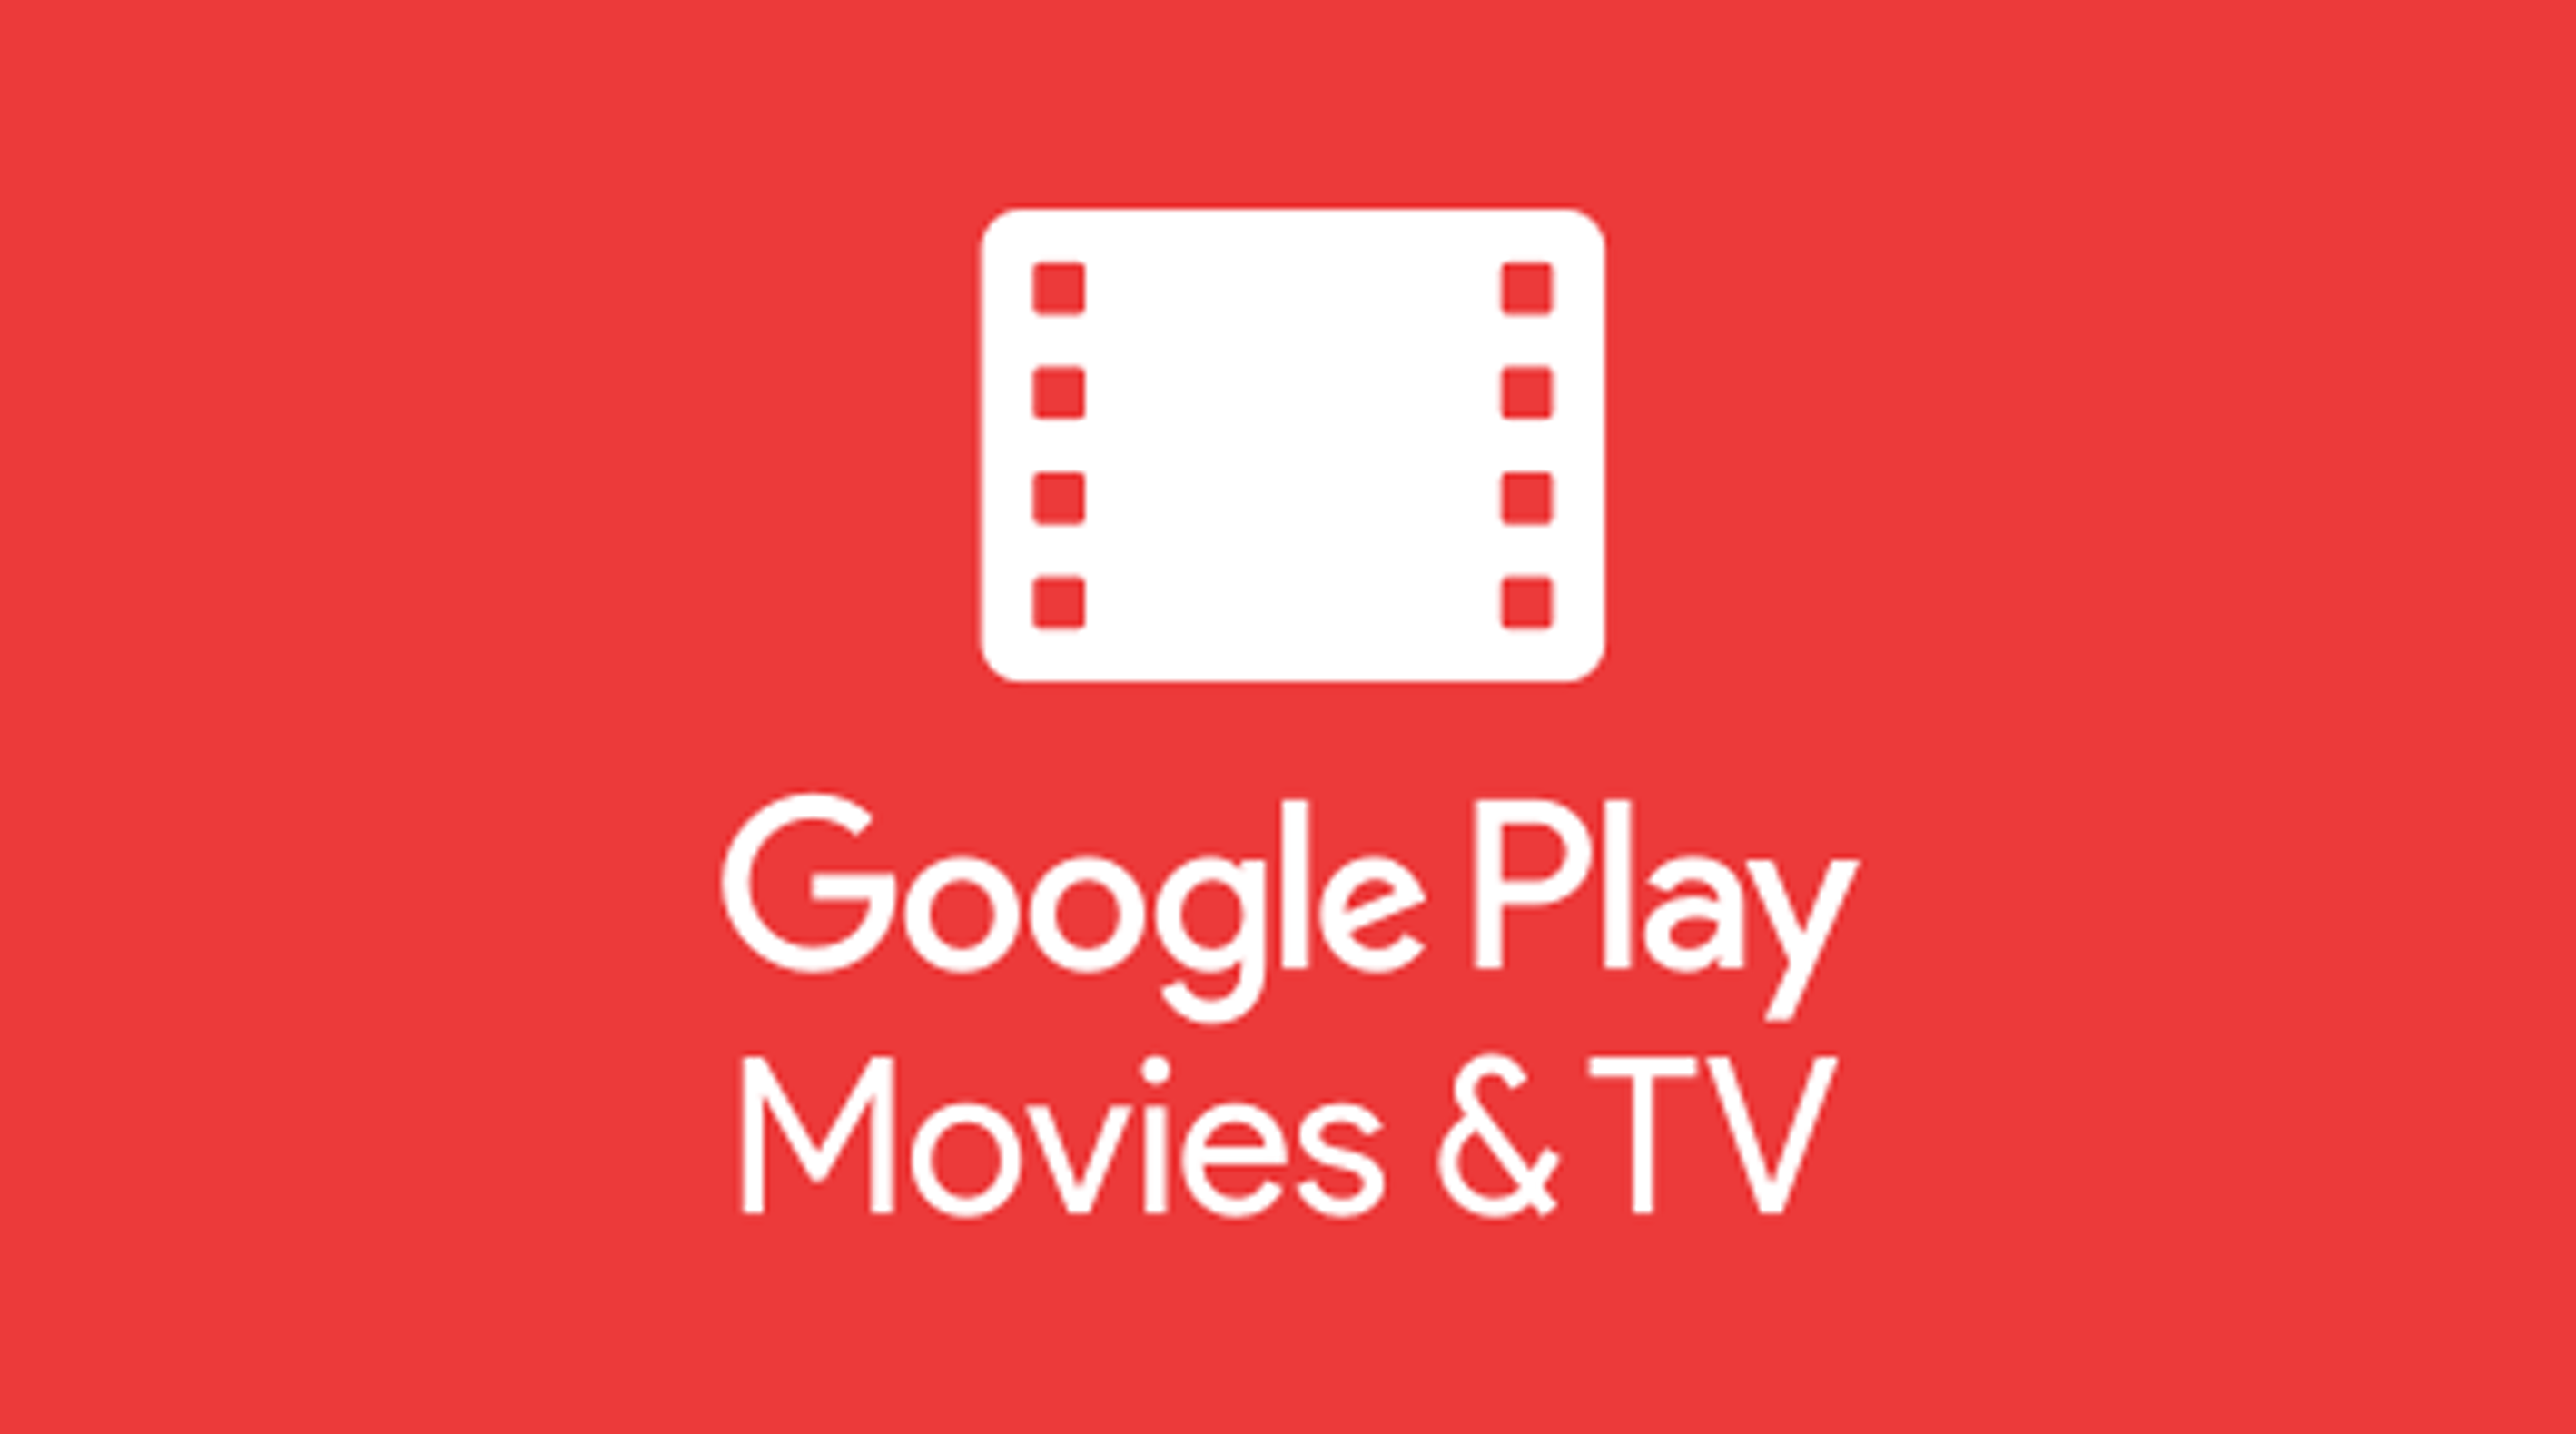 Google Play Movies & TV เปิดโหมดภาพ HDR ในภาพยนตร์ 4K สำหรับดูผ่าน Chromecast Ultra